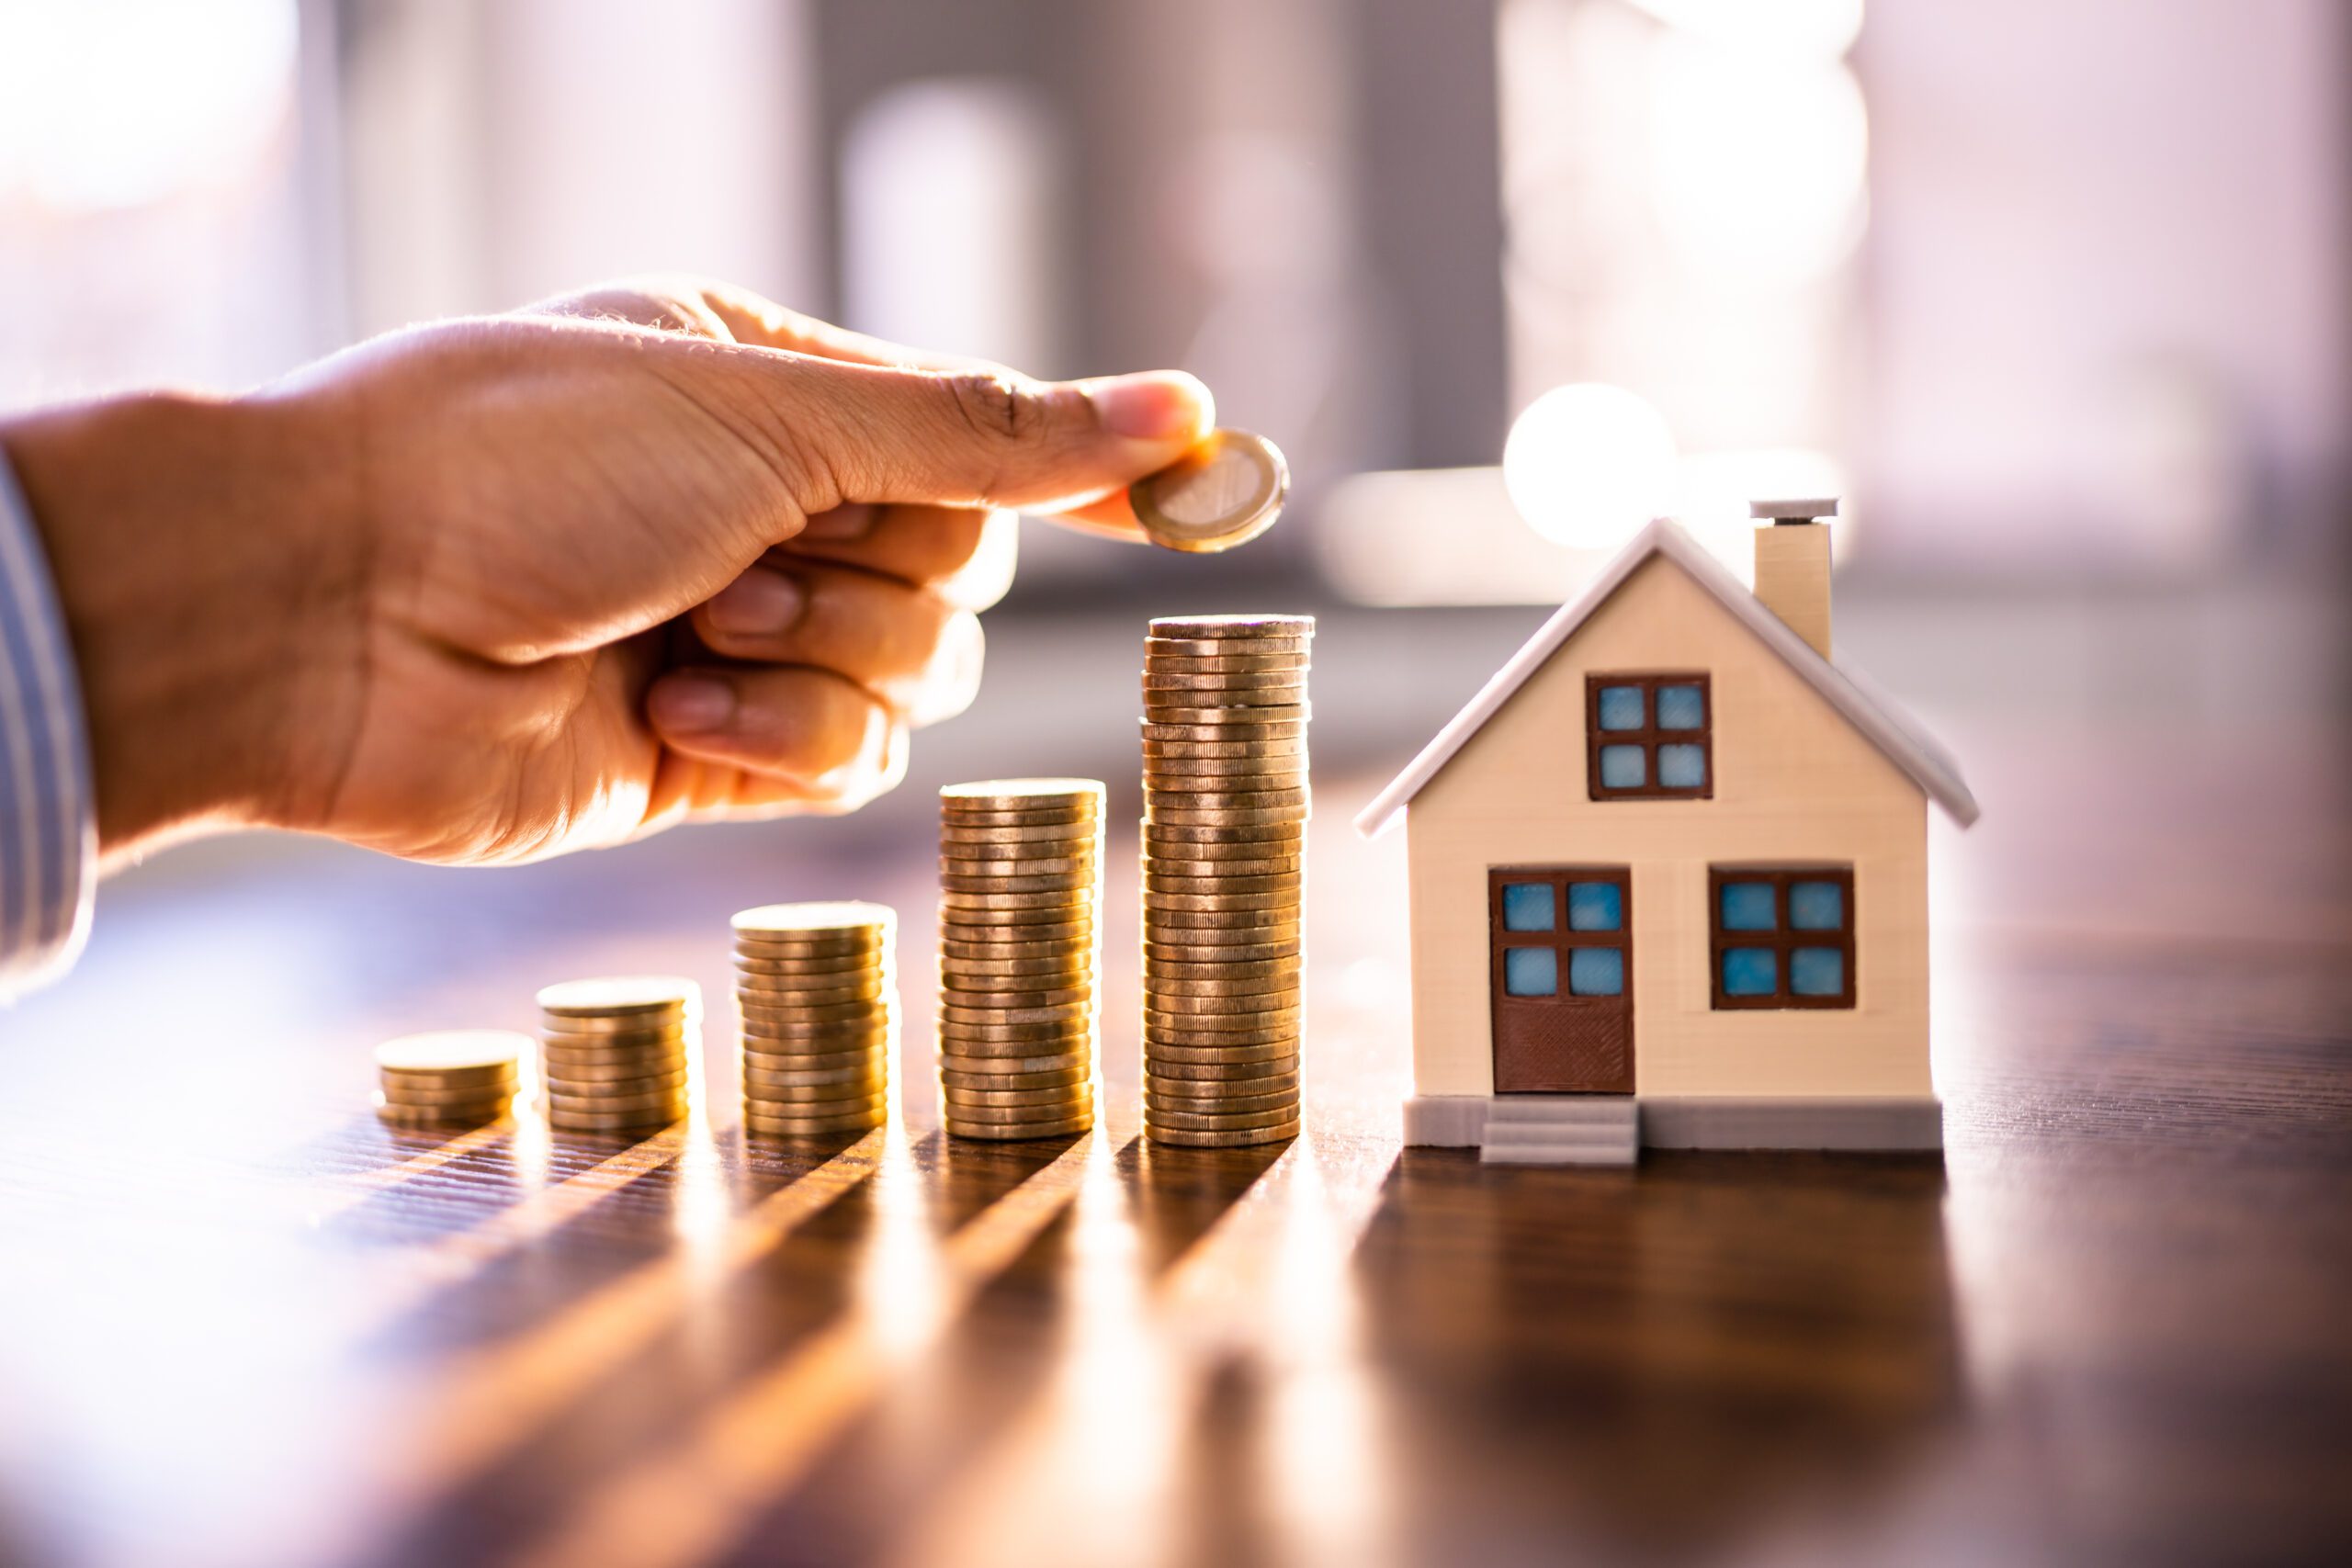 Real Estate Market Investing. House Money